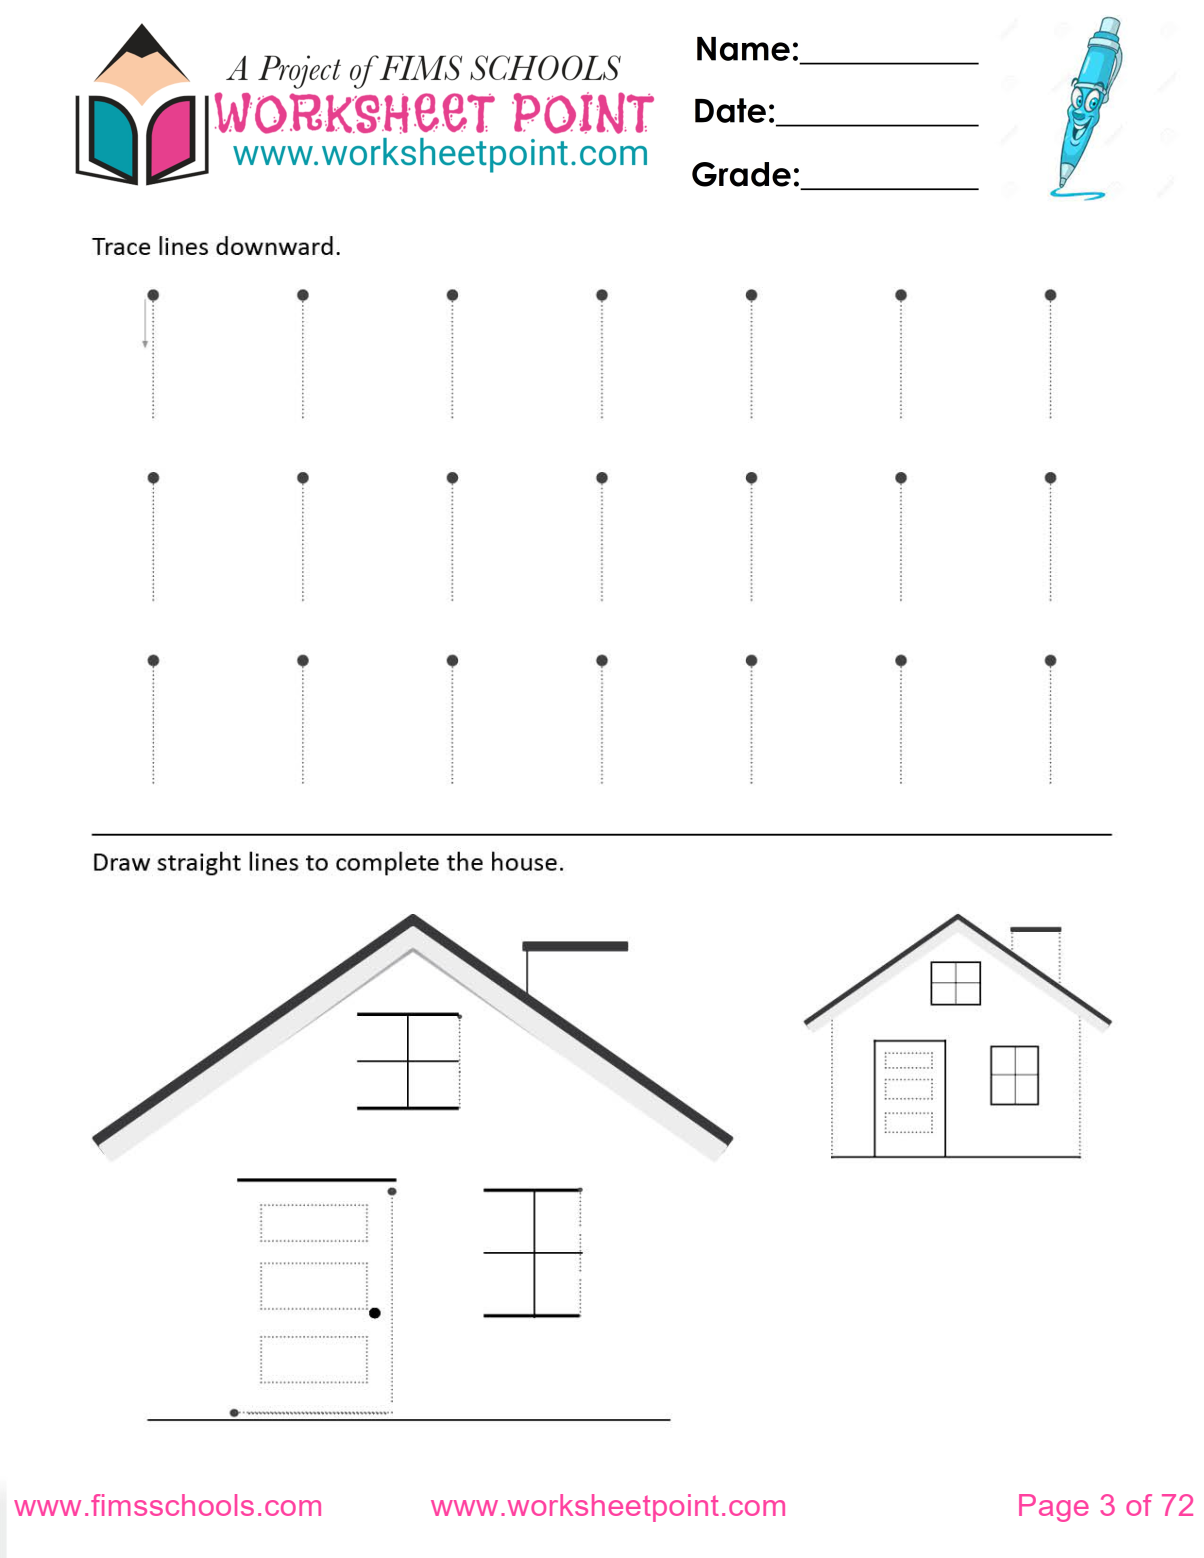 english-alphabet-worksheets-preschool